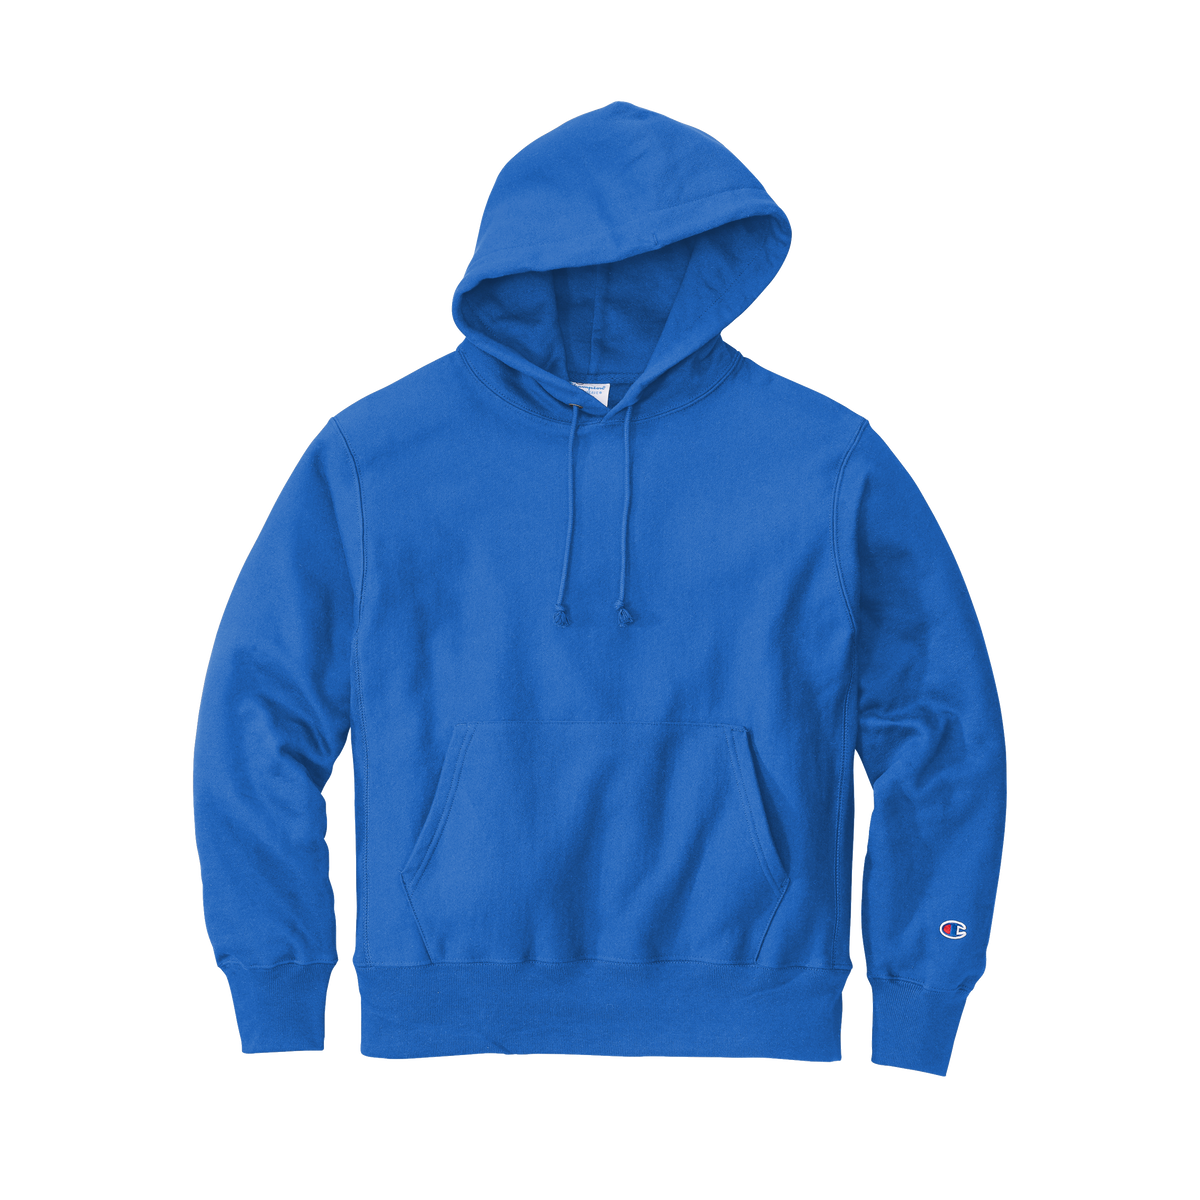  Plain Royal Blue Hooded Sweatshirt for Women